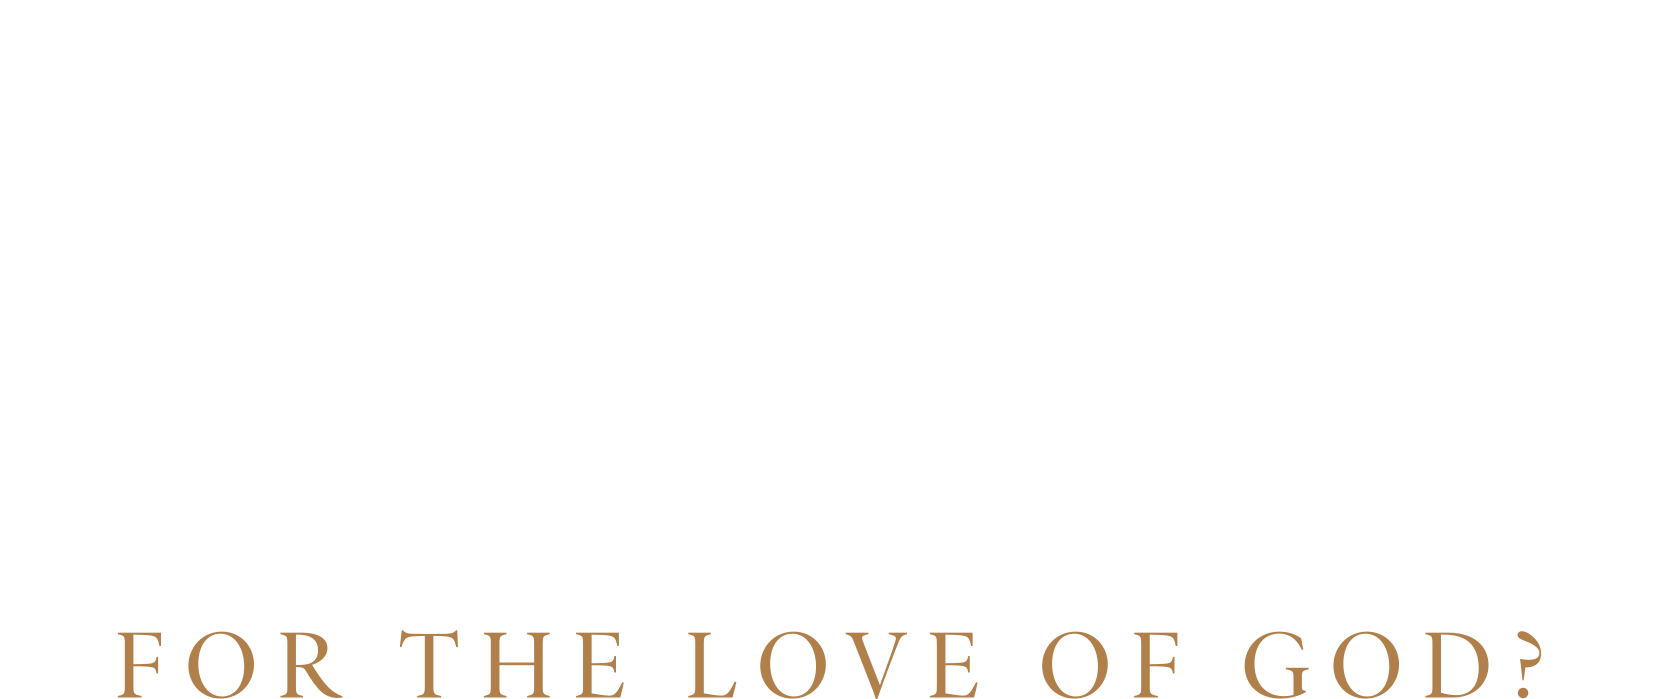 Mother Teresa: For The Love of God